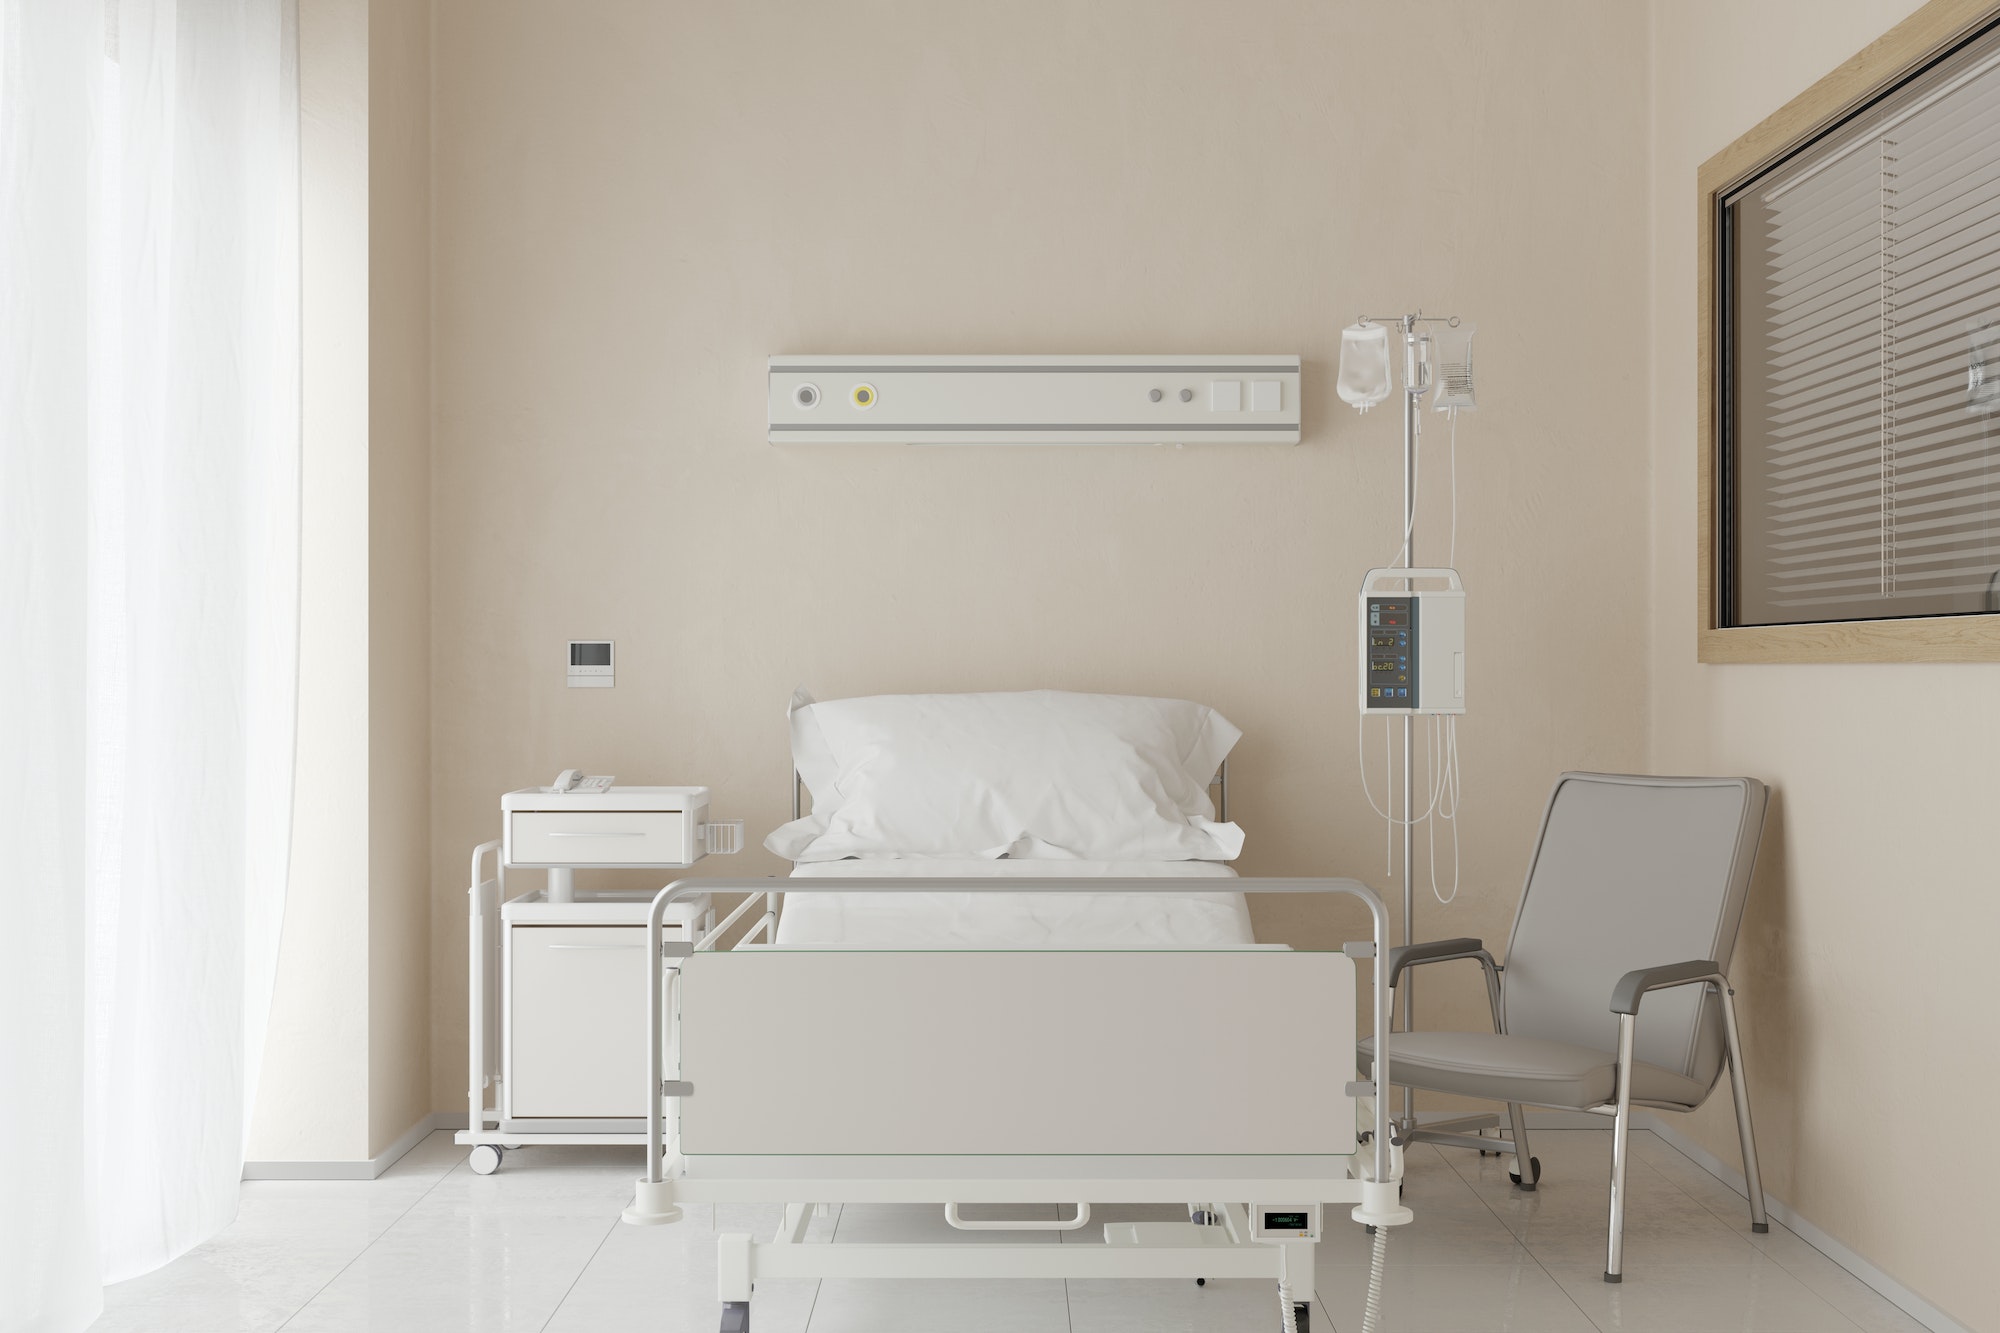 Modern hospital room